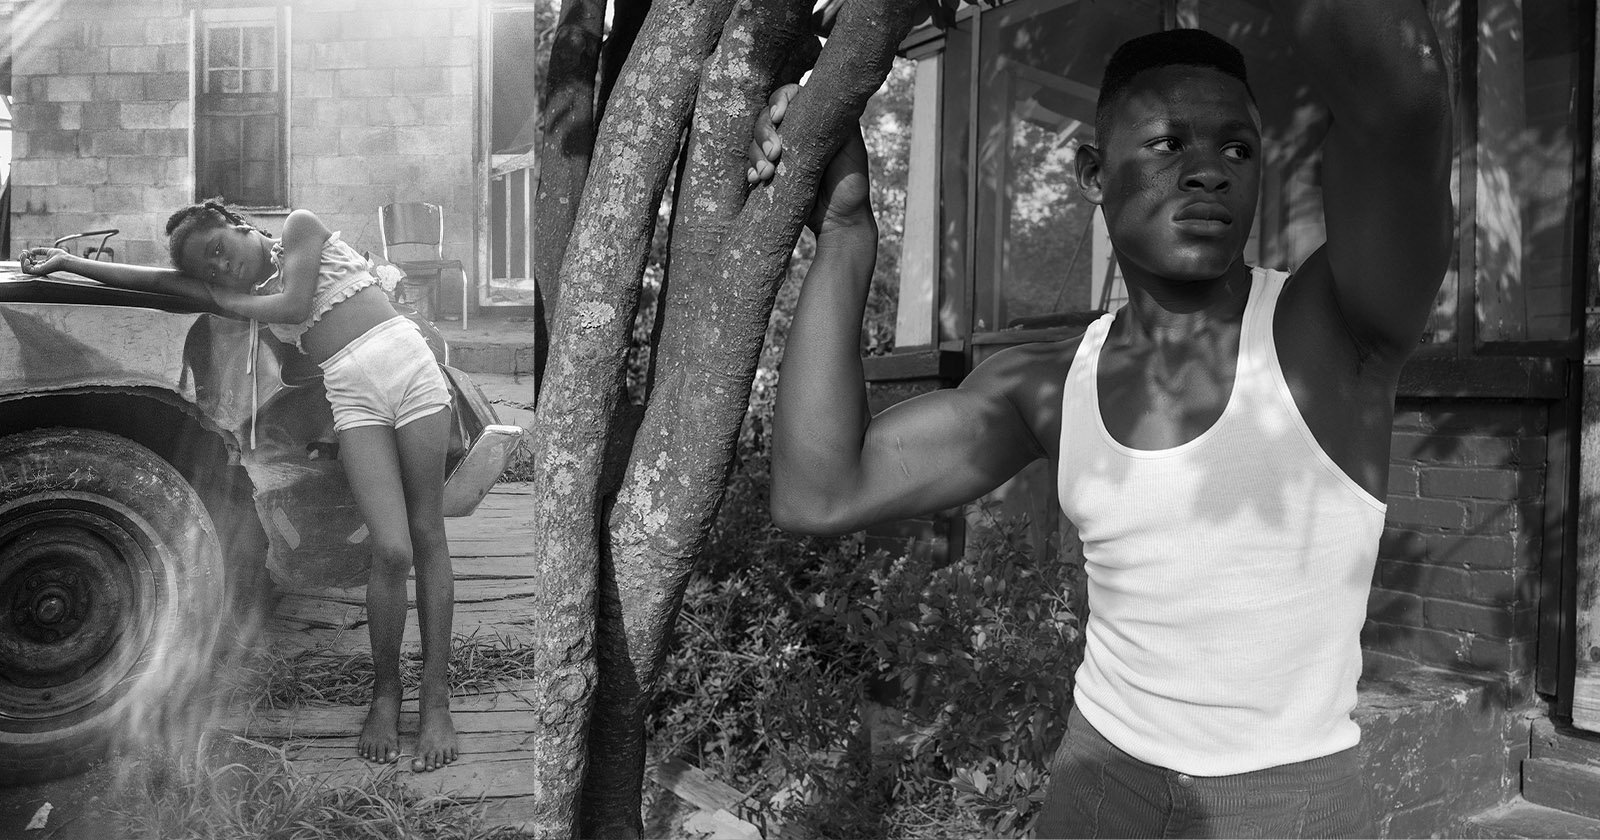 Large Format Photos Document Black Communities in the 1980s Deep South | PetaPixel